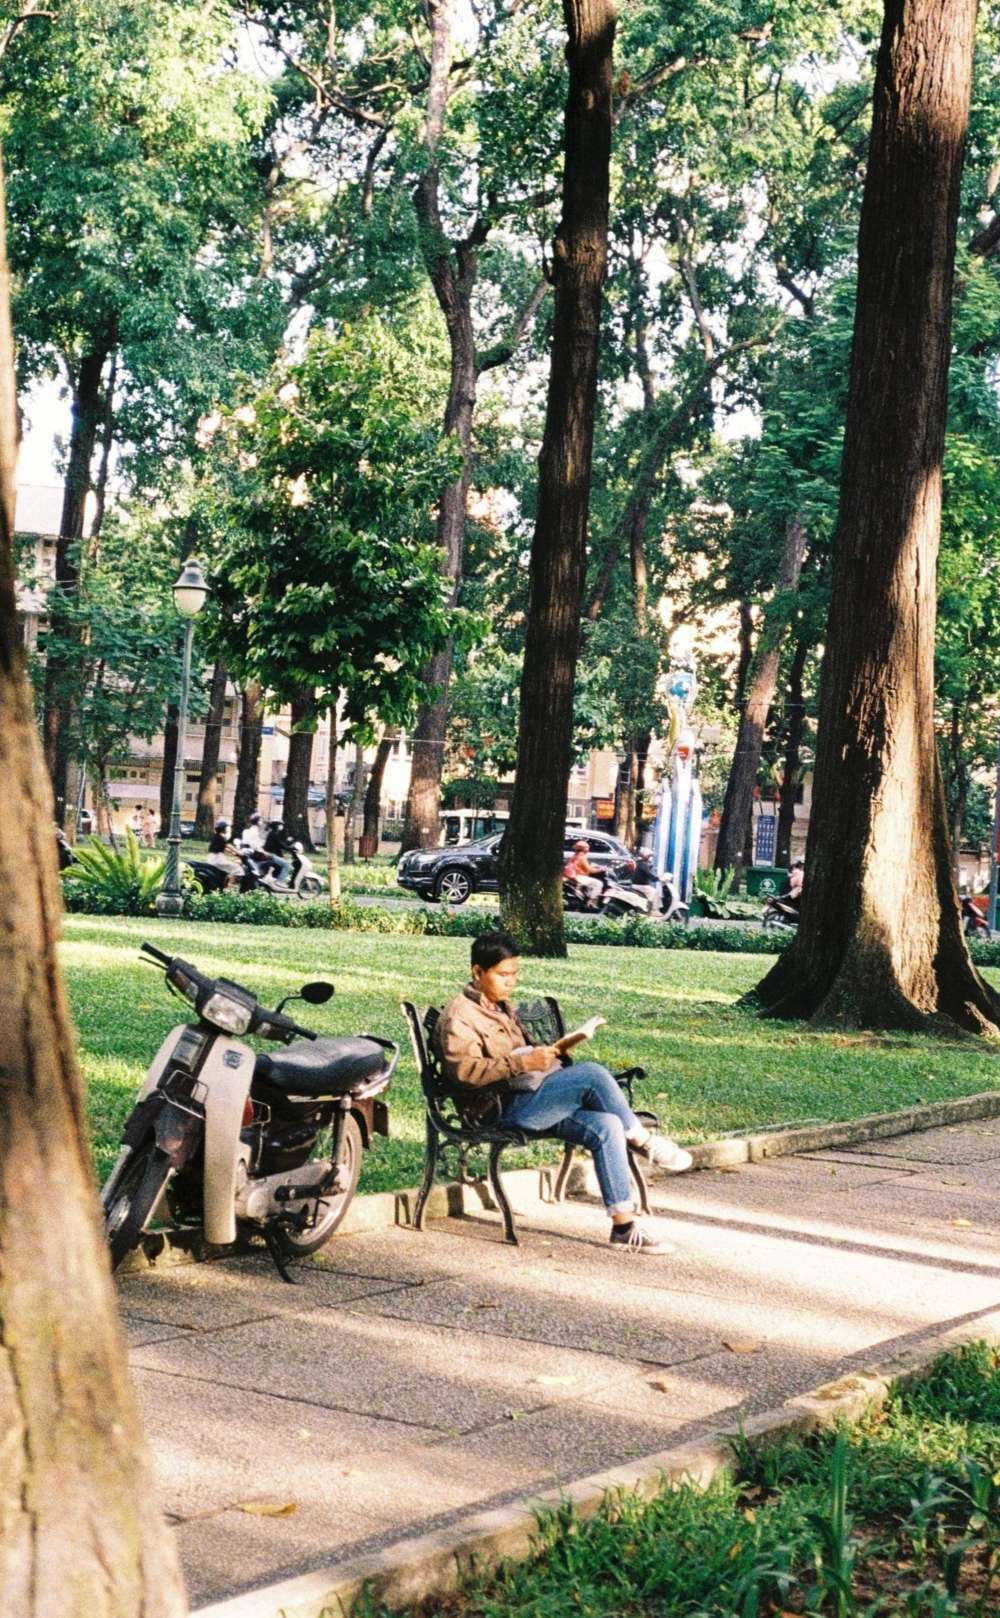 Park Ho Chi Minh City